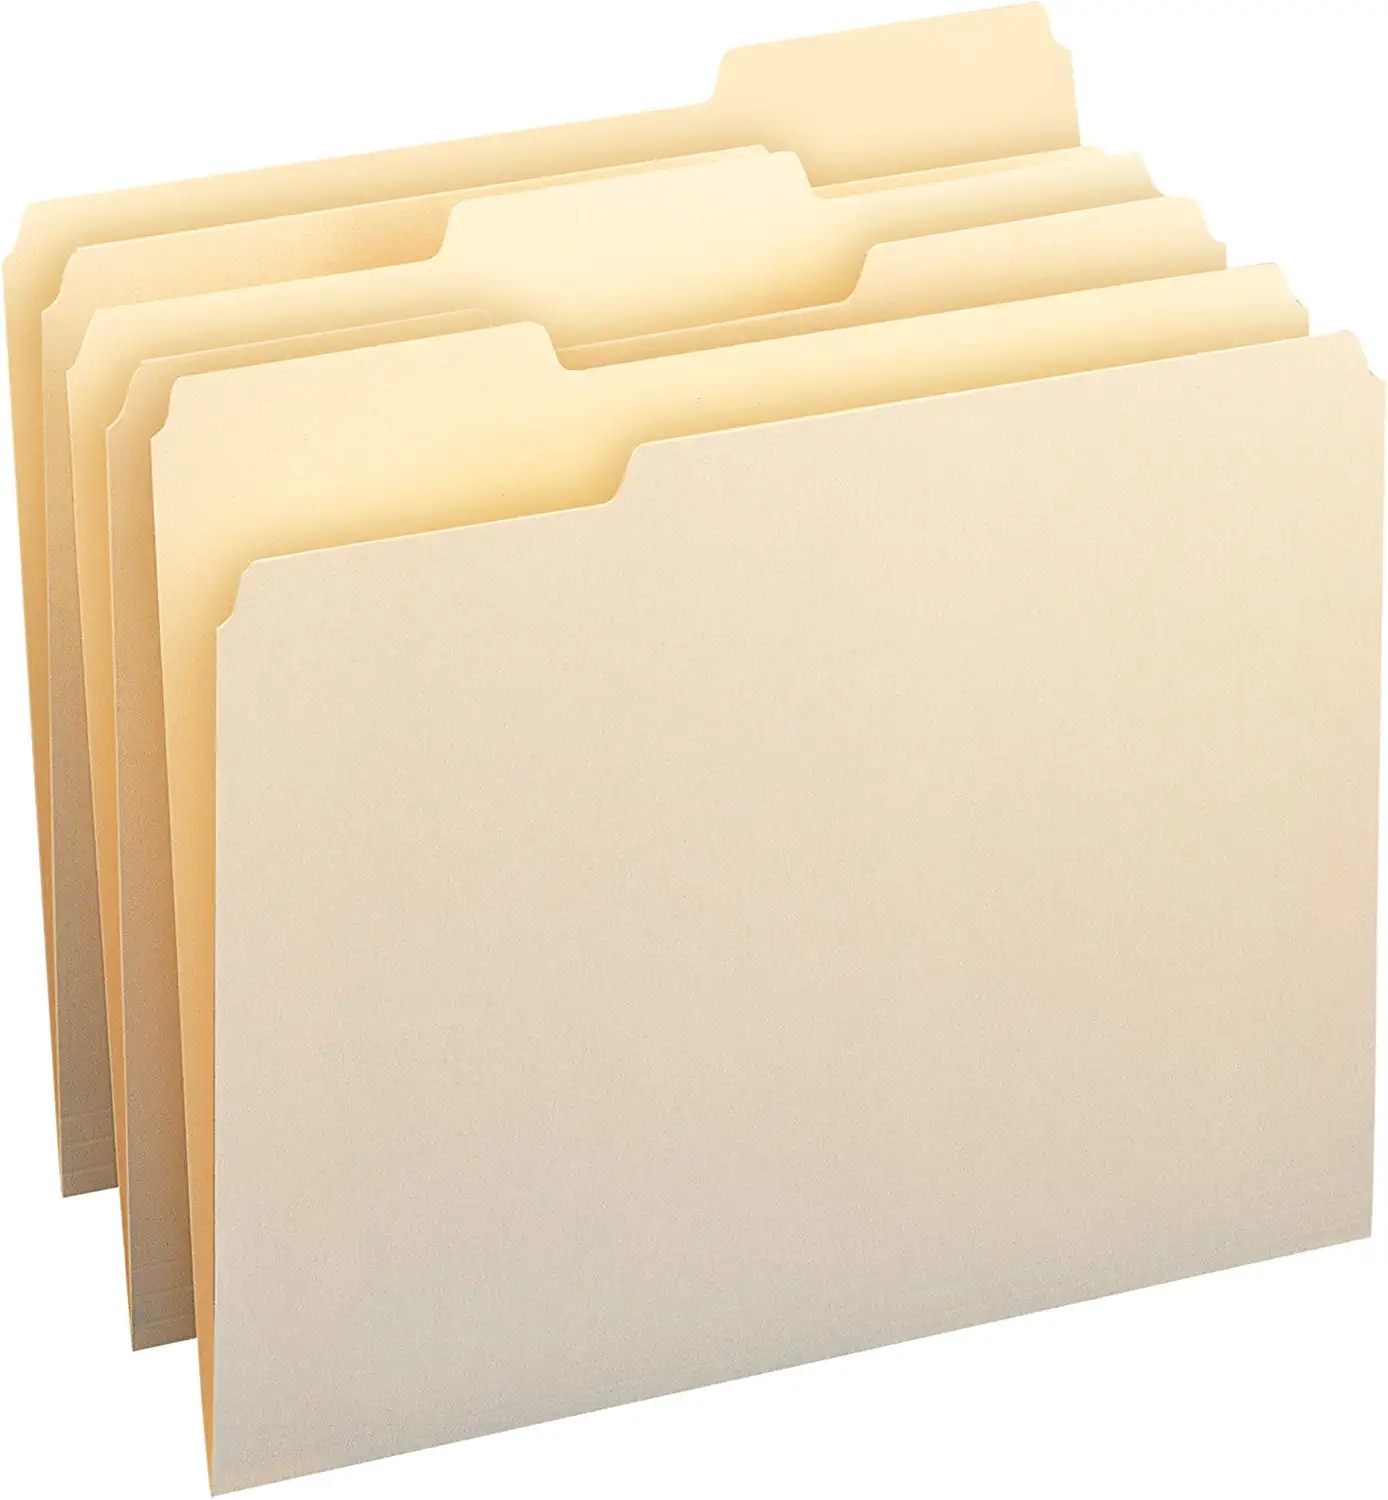 4 Hole Binder Folders A4 File Folders 4 Hole Binder Folders Document Ring Binder  Folder Display Book Morandi Color Waterproof Office School Supplies  Document Storage Bag Insert File Folder